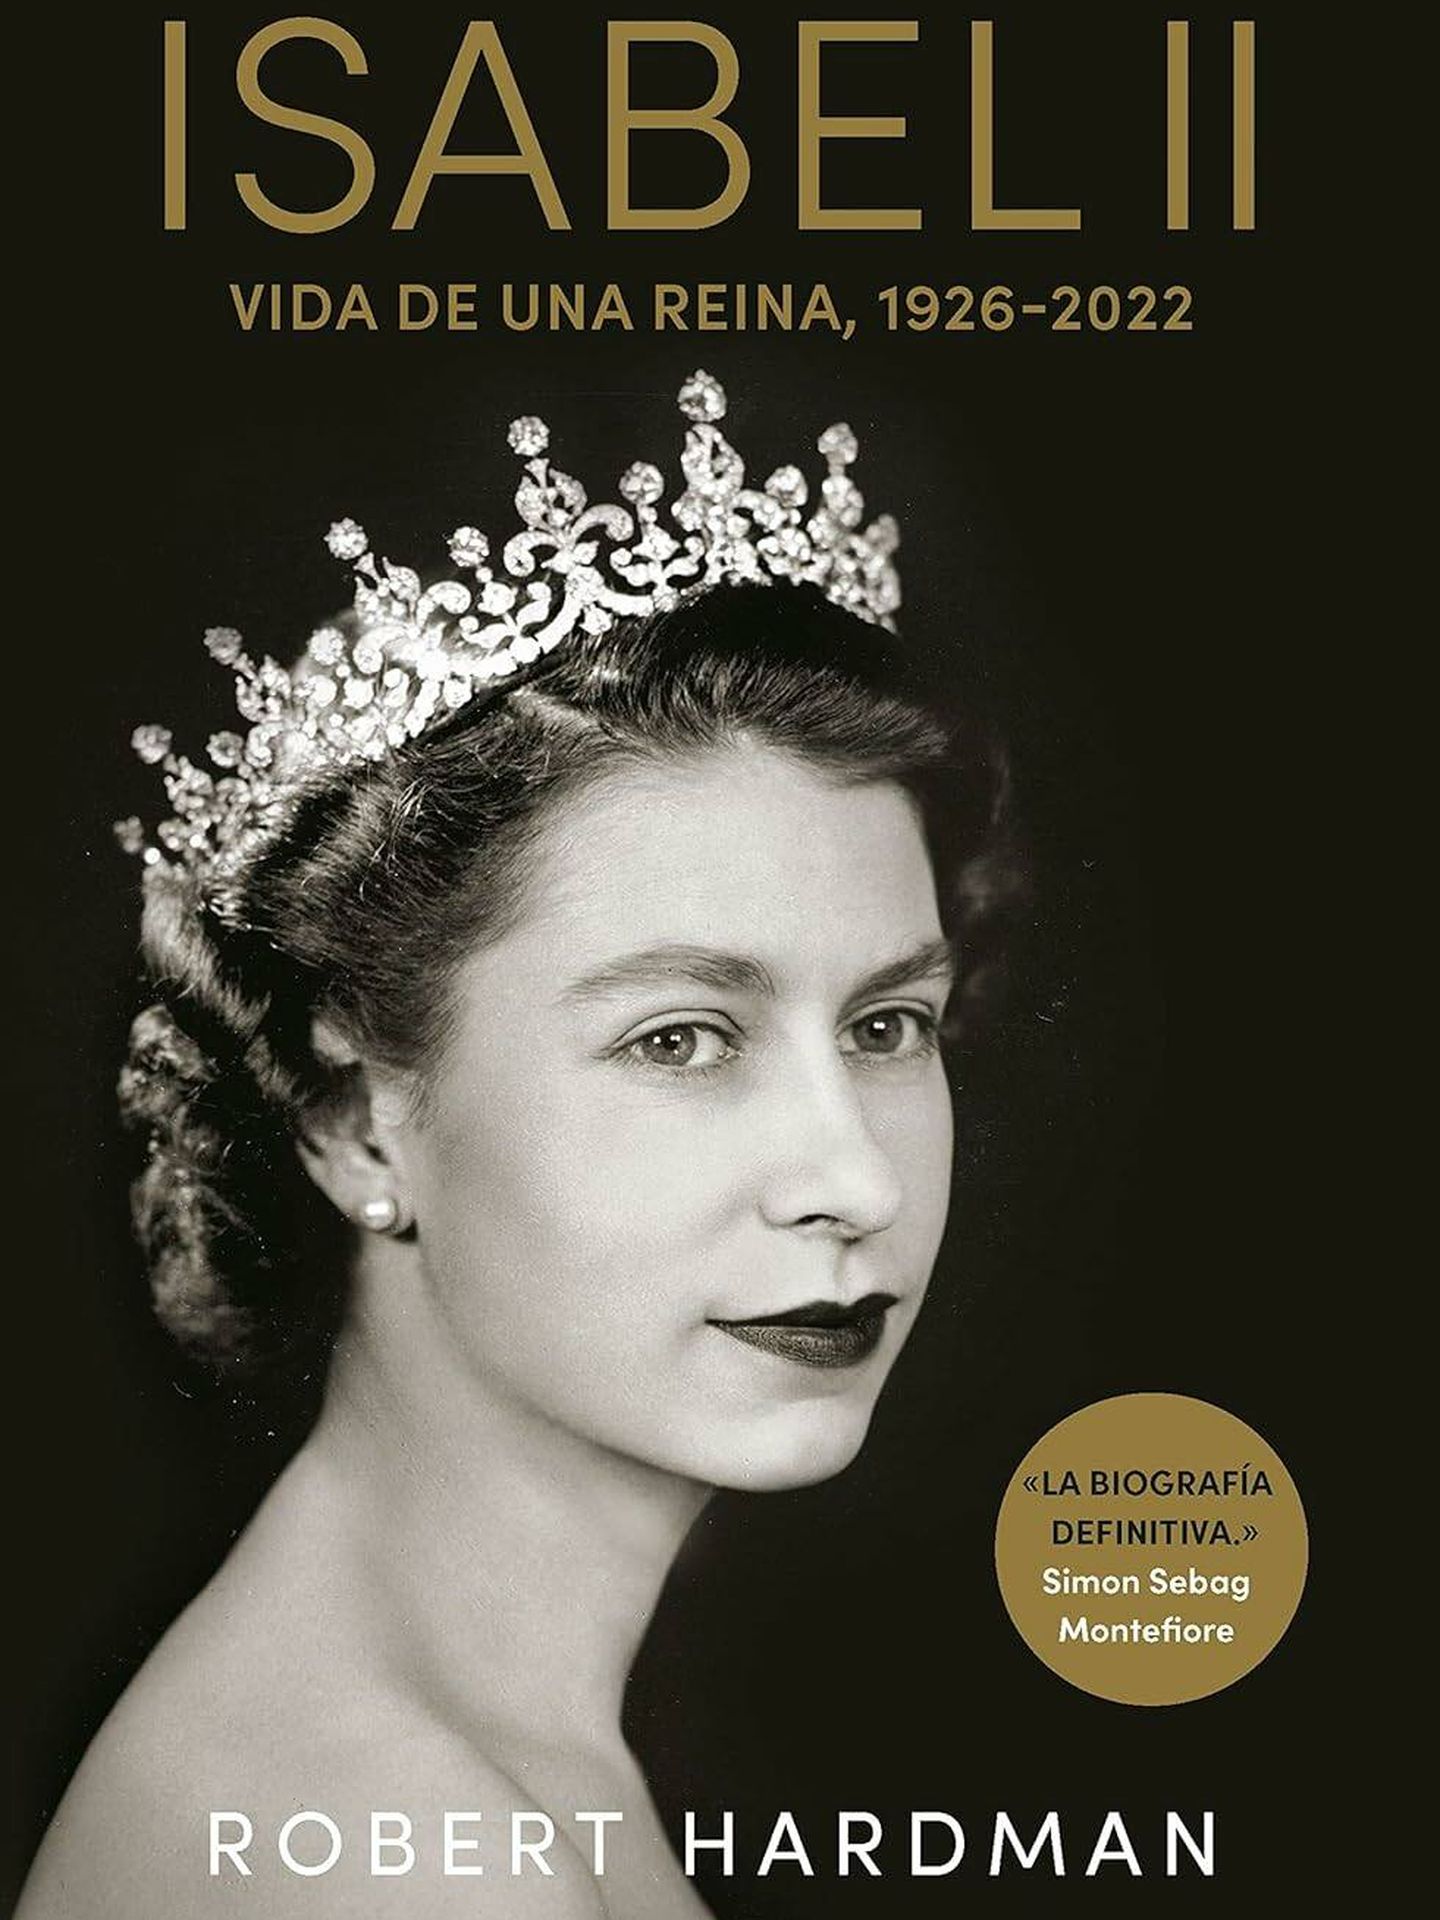 Portada de 'Isabel II. Vida de una reina', la biografía de Robert Hardman sobre la monarca.